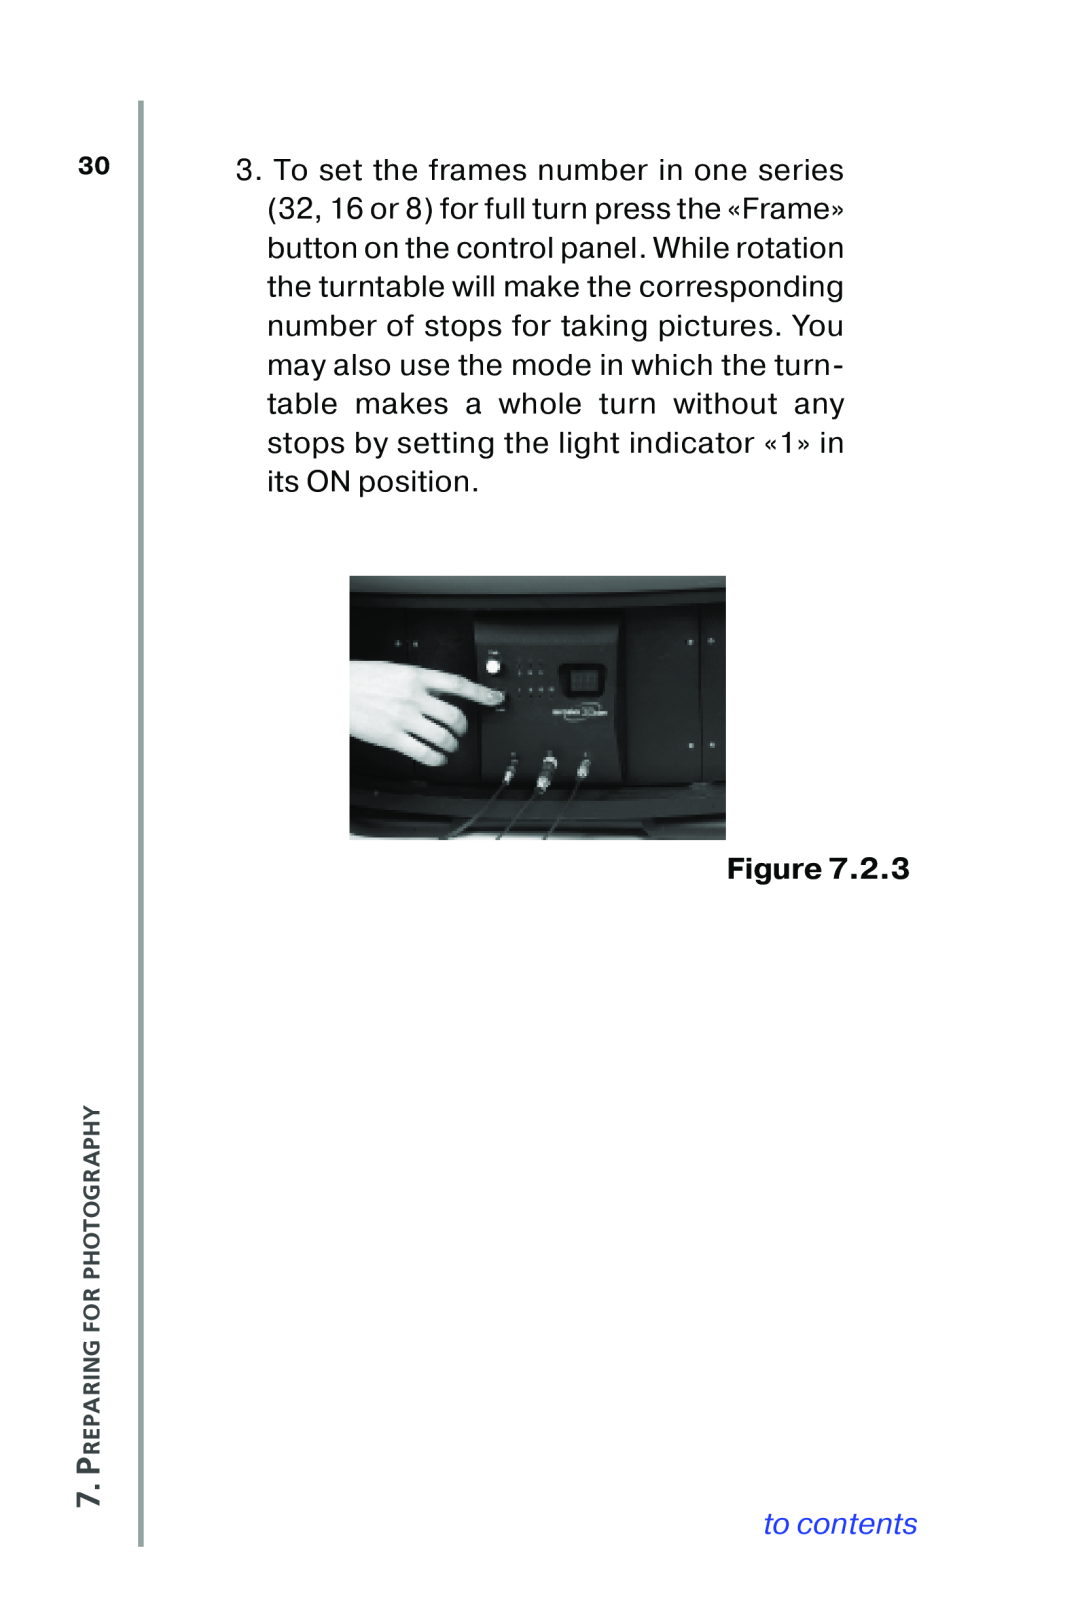 Nikon XT350, XT100 manual to contents, Preparing For Photography 